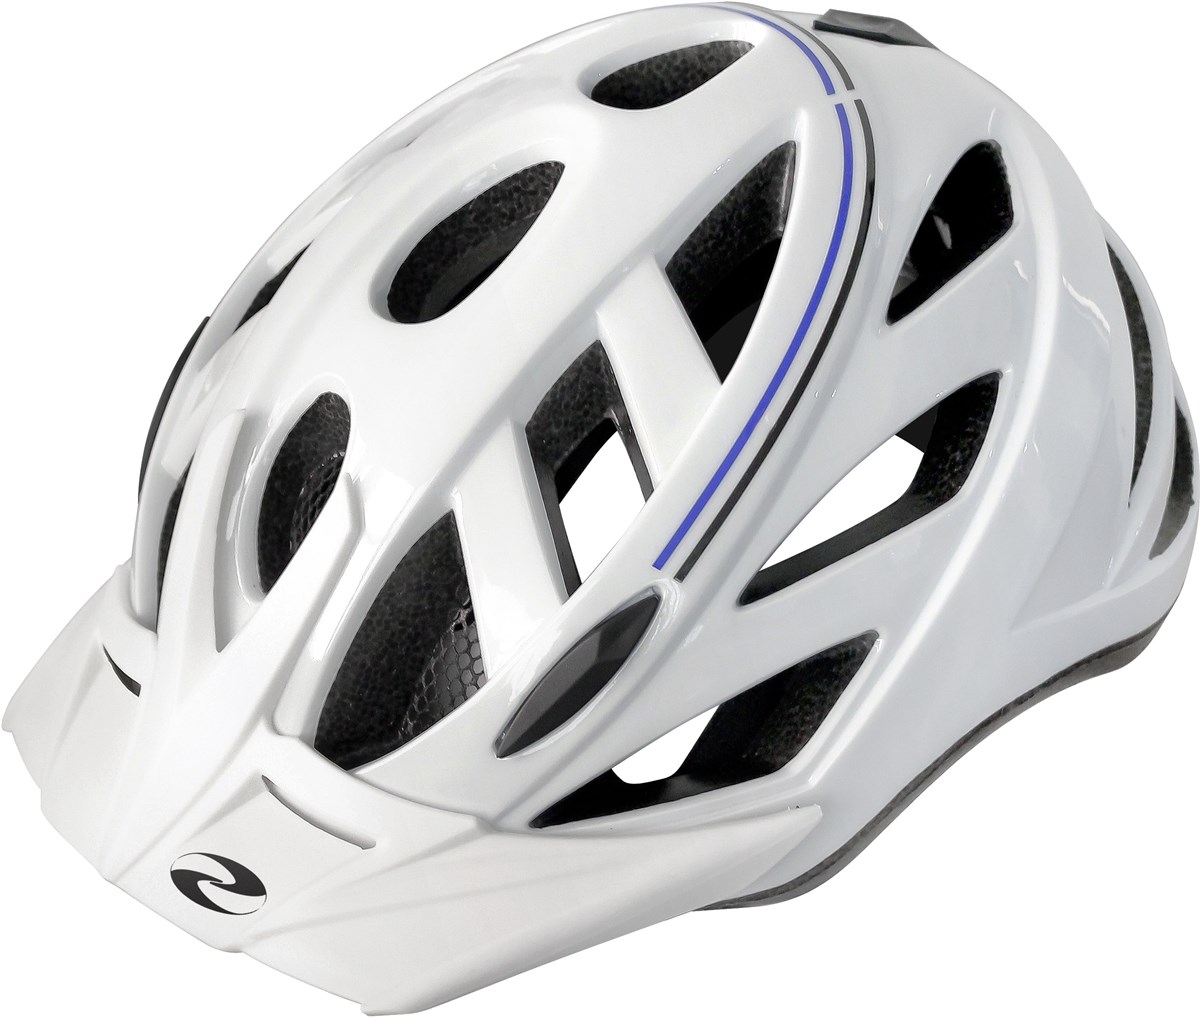 Dawes Switch MTB Cycling Helmet 2016 product image